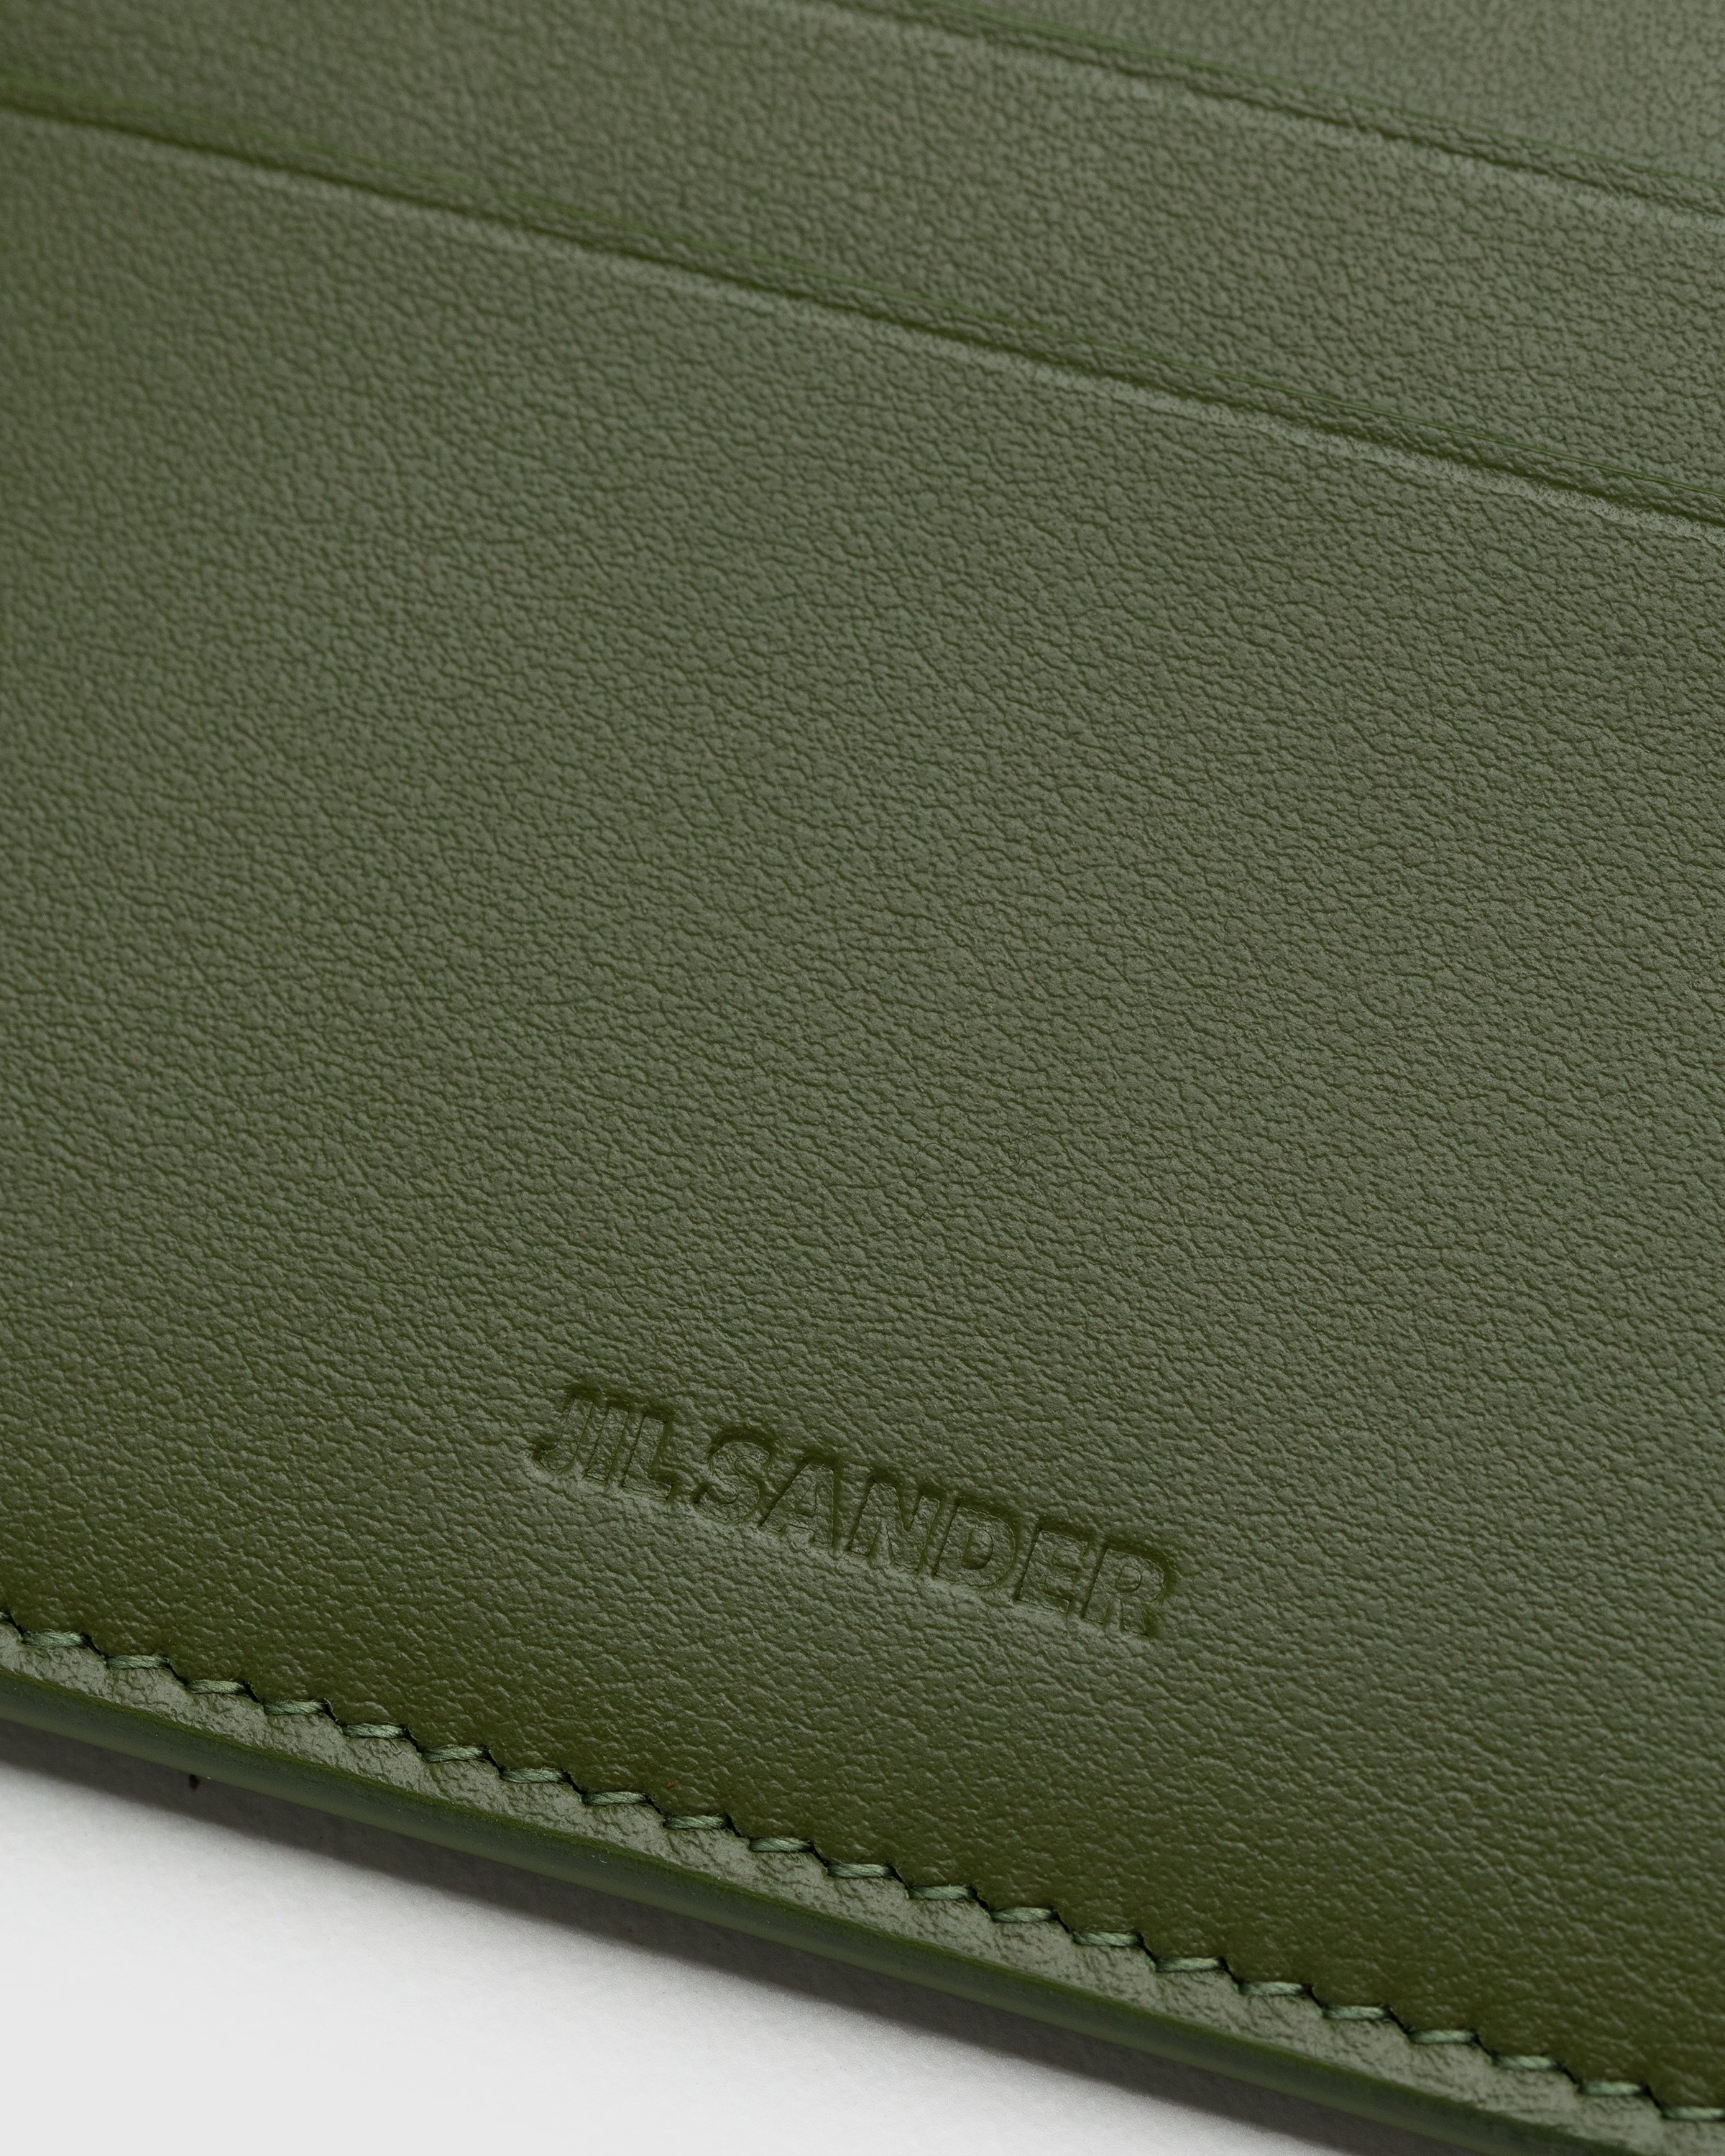 Jil Sander - Leather Card Holder Green - Accessories - Grey - Image 4